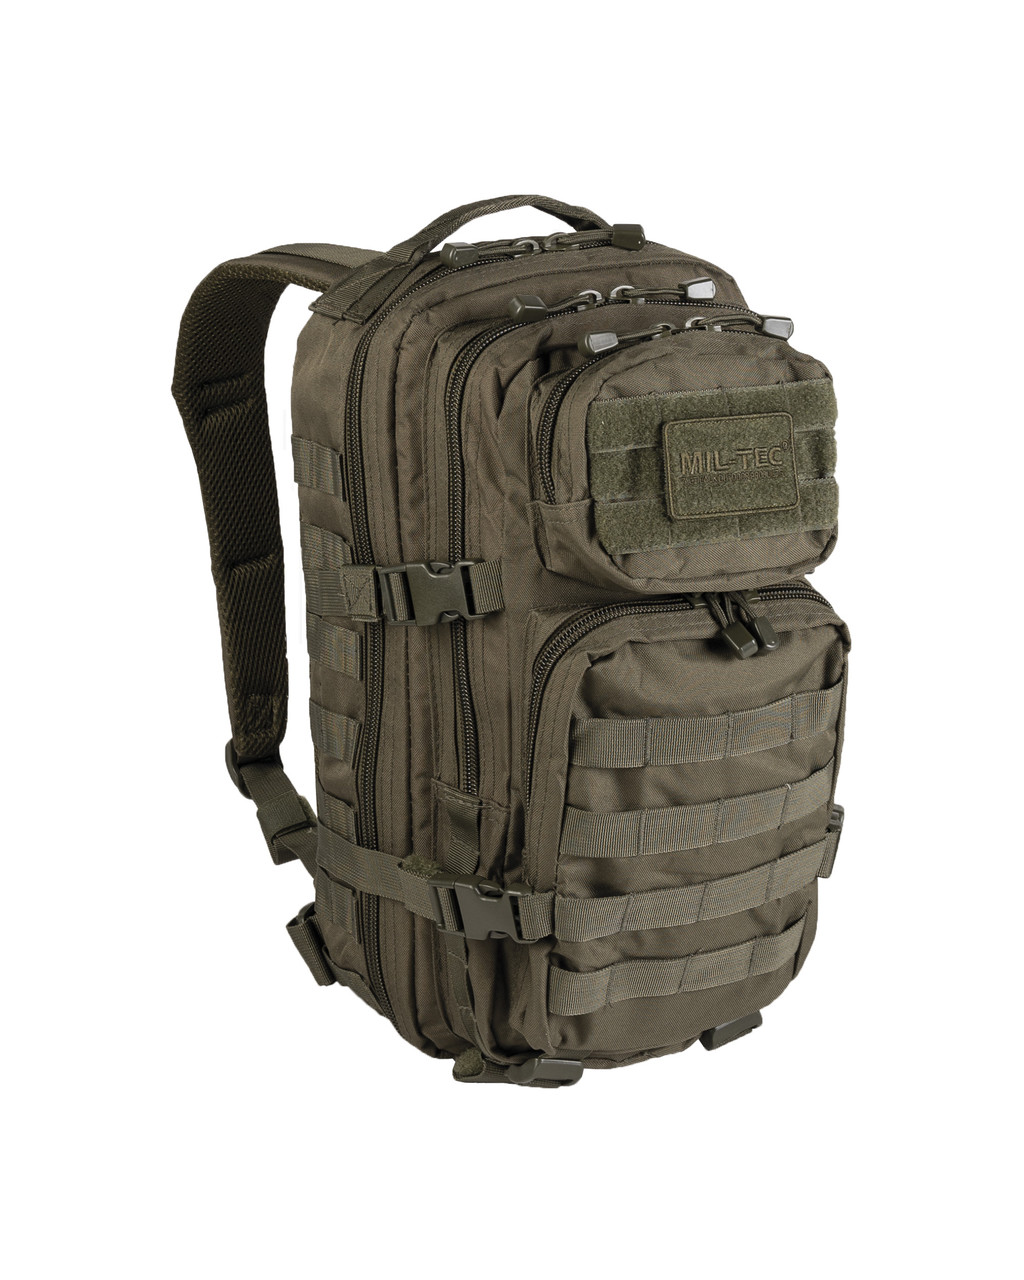 MIL-TEC Assault Backpack, Flecktarn Camo, 36L, 140 - Backpacks, Totes &  Luggage at  : 1026284763